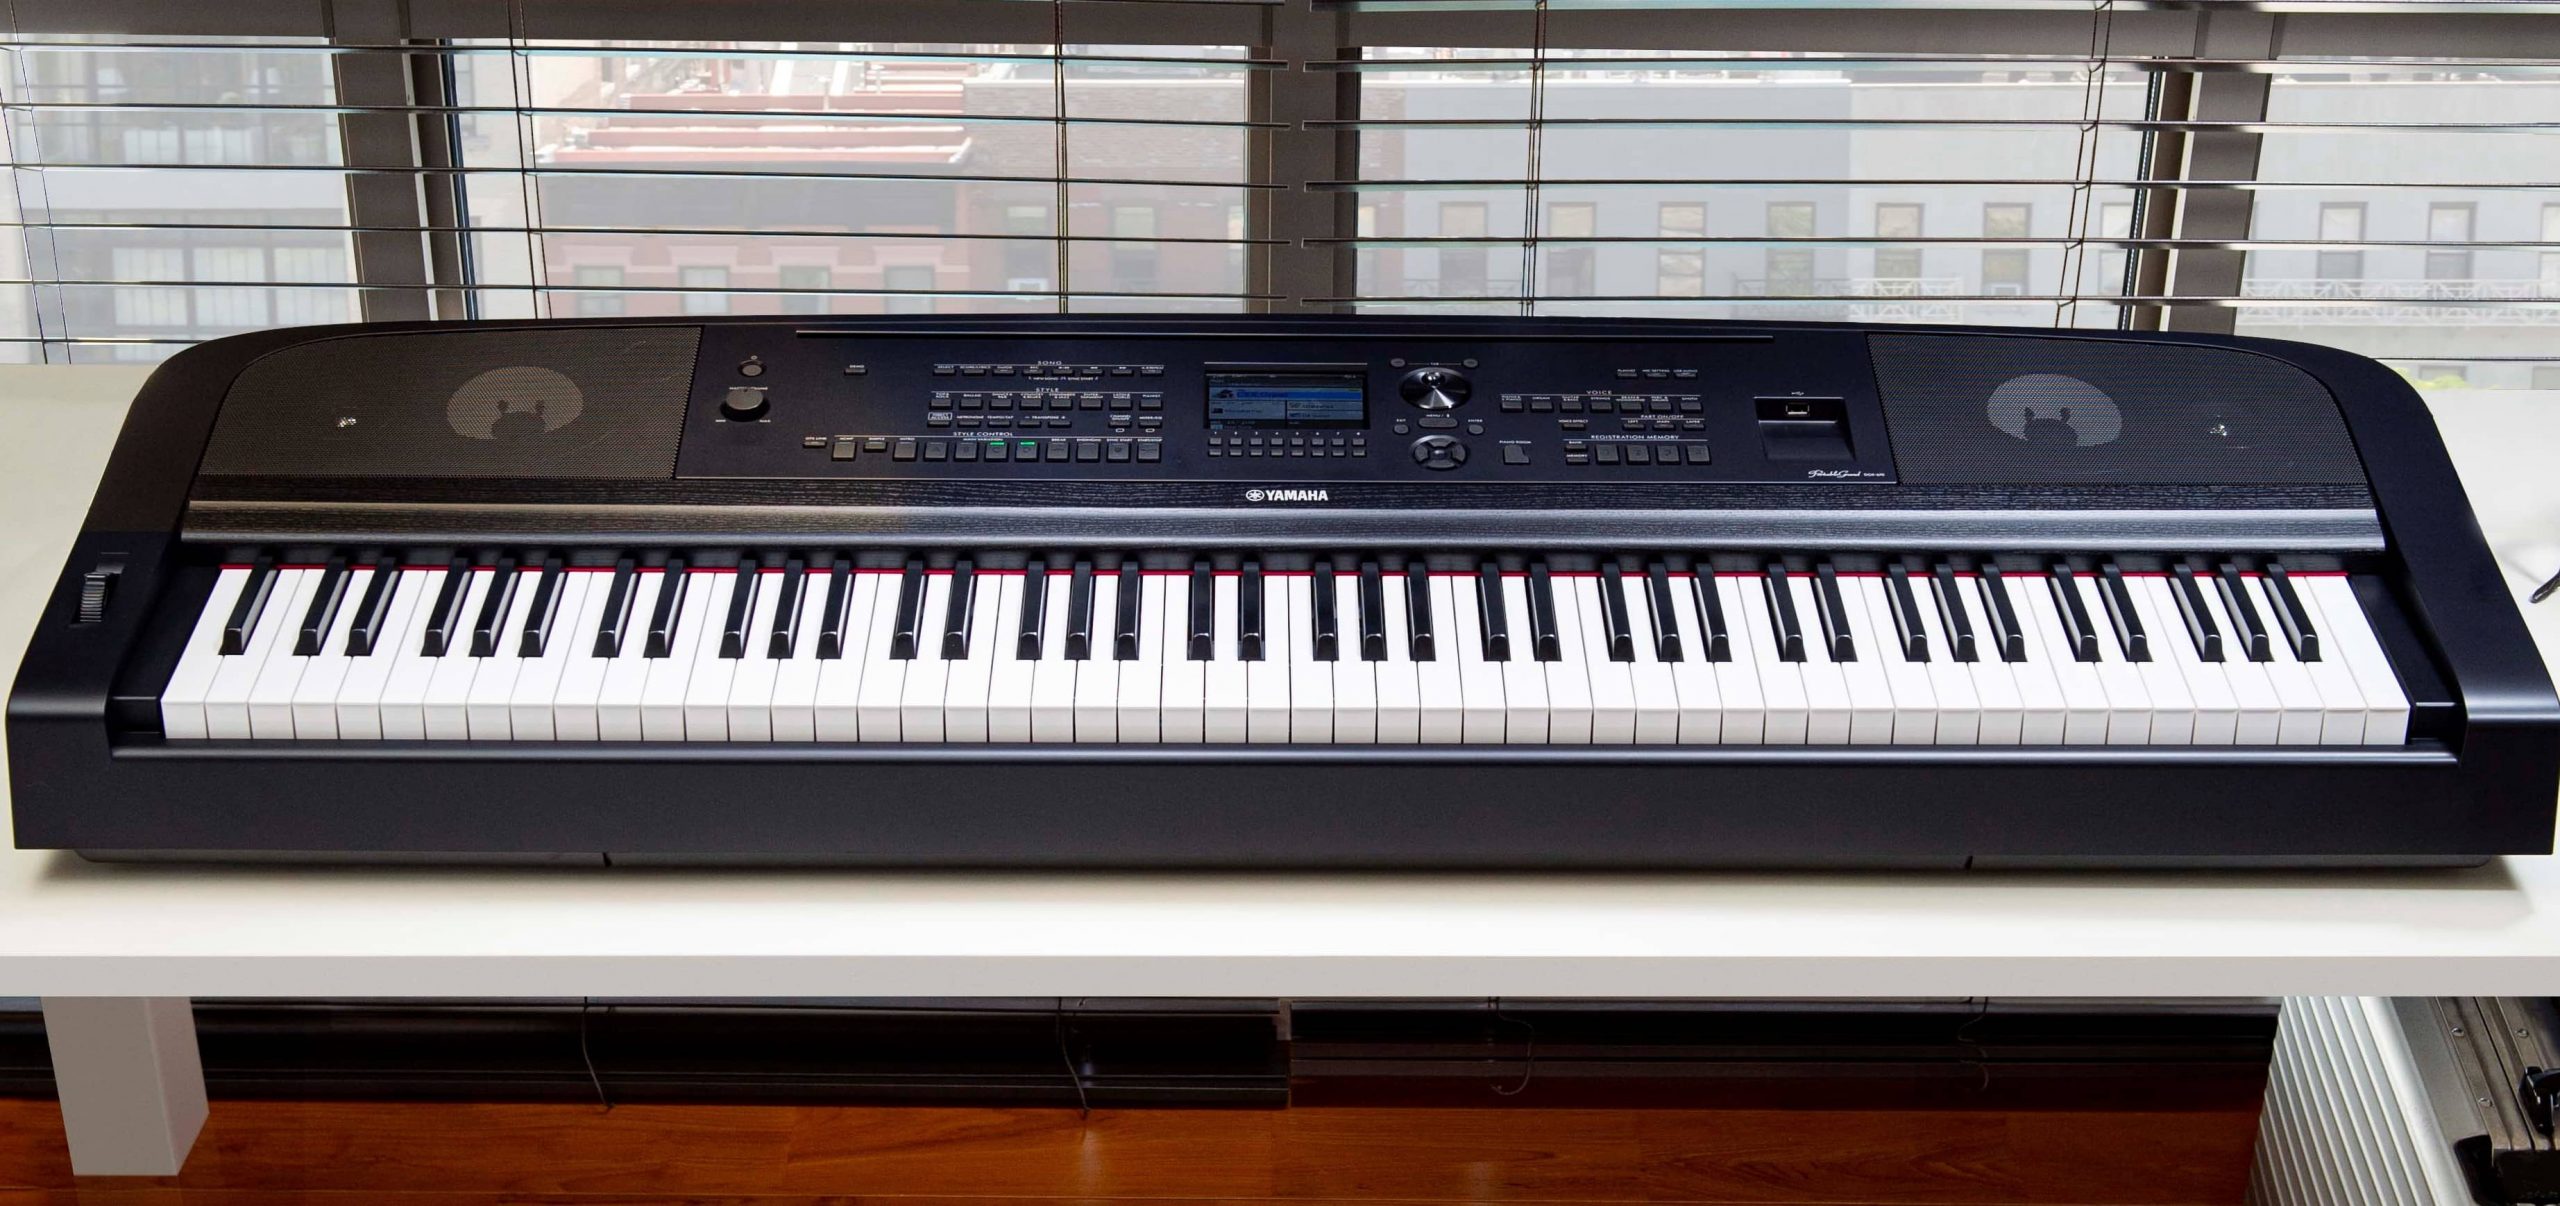 Top 10 MIDI Songs for Yamaha Keyboards